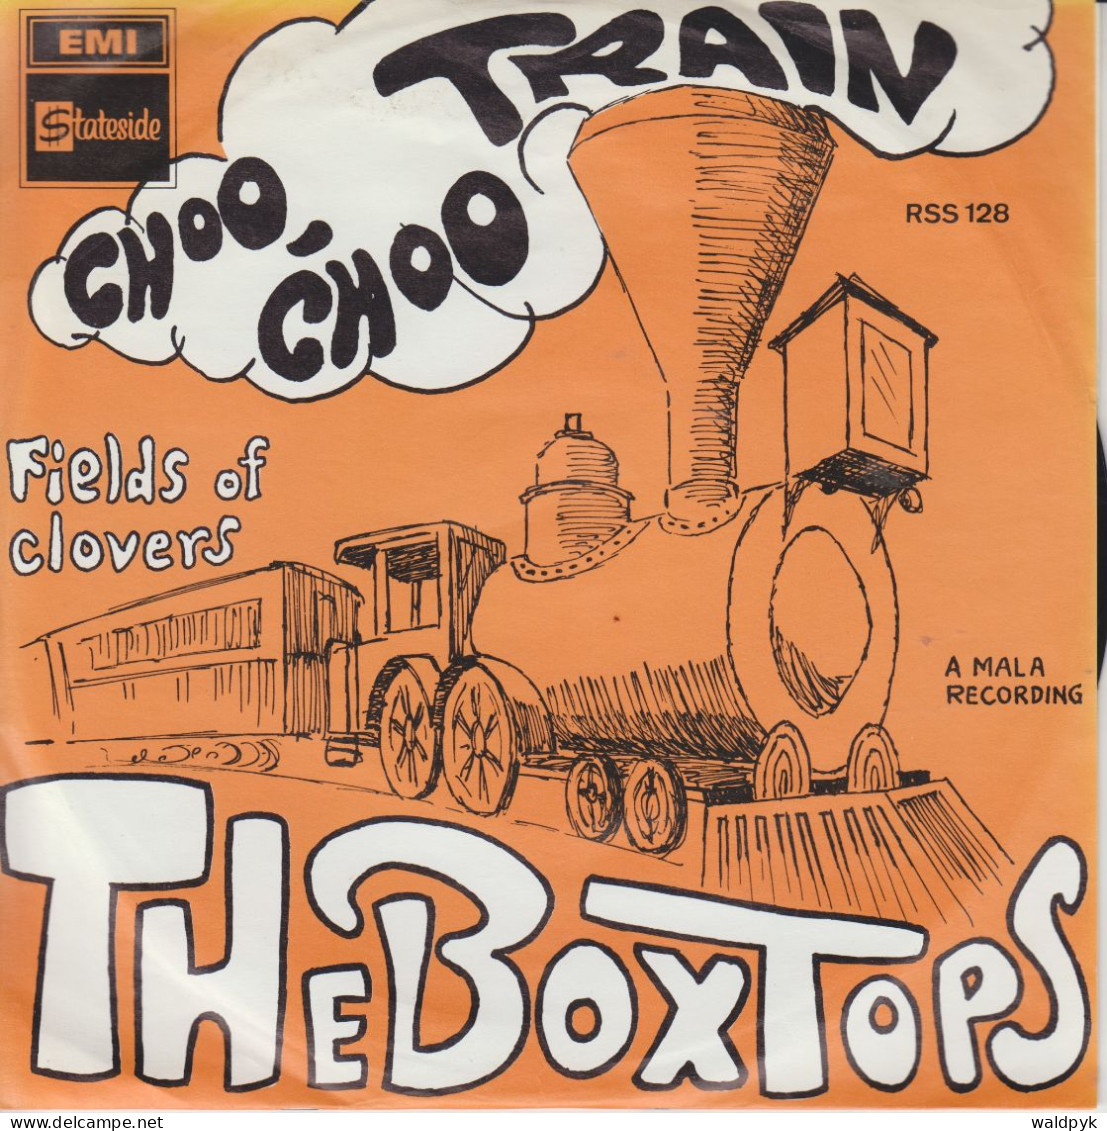 THE BOX TOPS - Choo Choo Train - Other - English Music